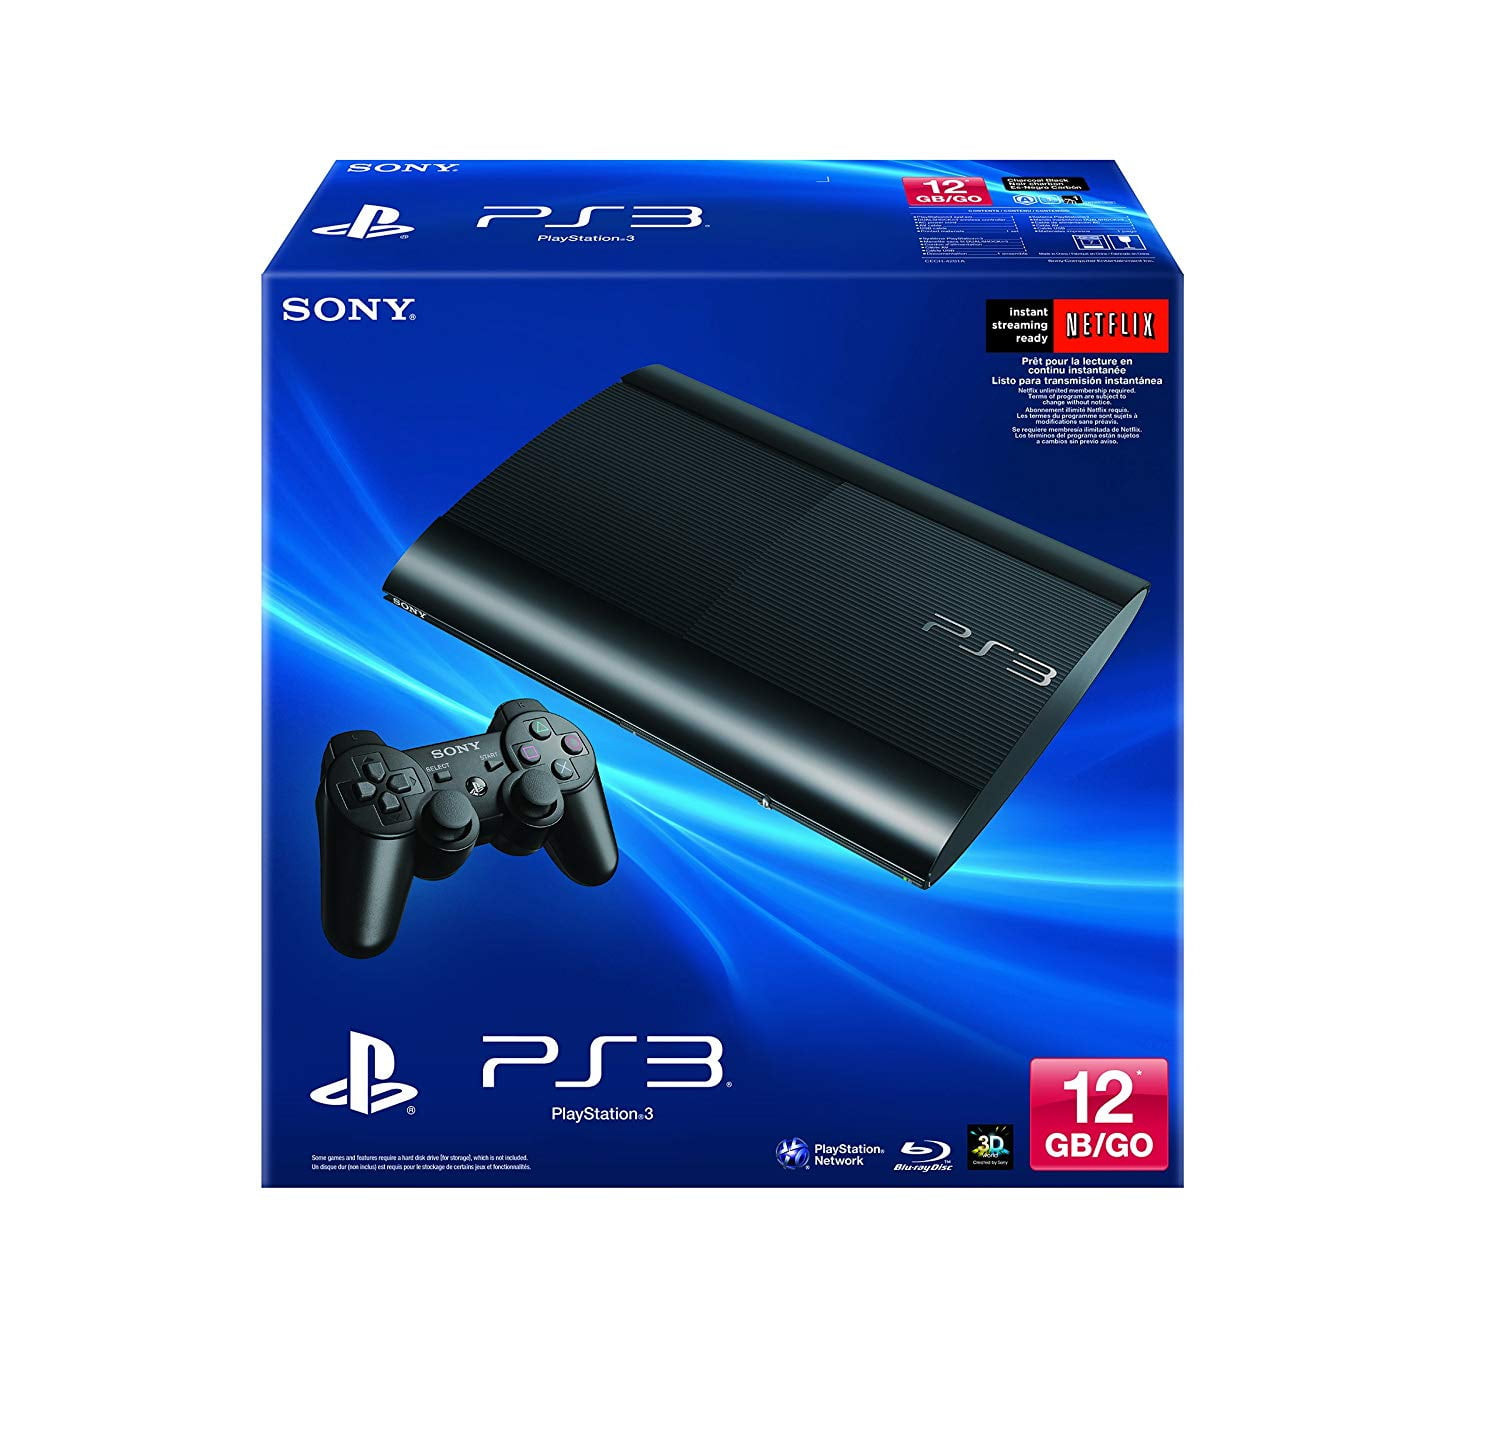 rommel zal ik doen Verhogen Restored Sony Computer Entertainment PlayStation 3 12GB System  (Refurbished) - Walmart.com